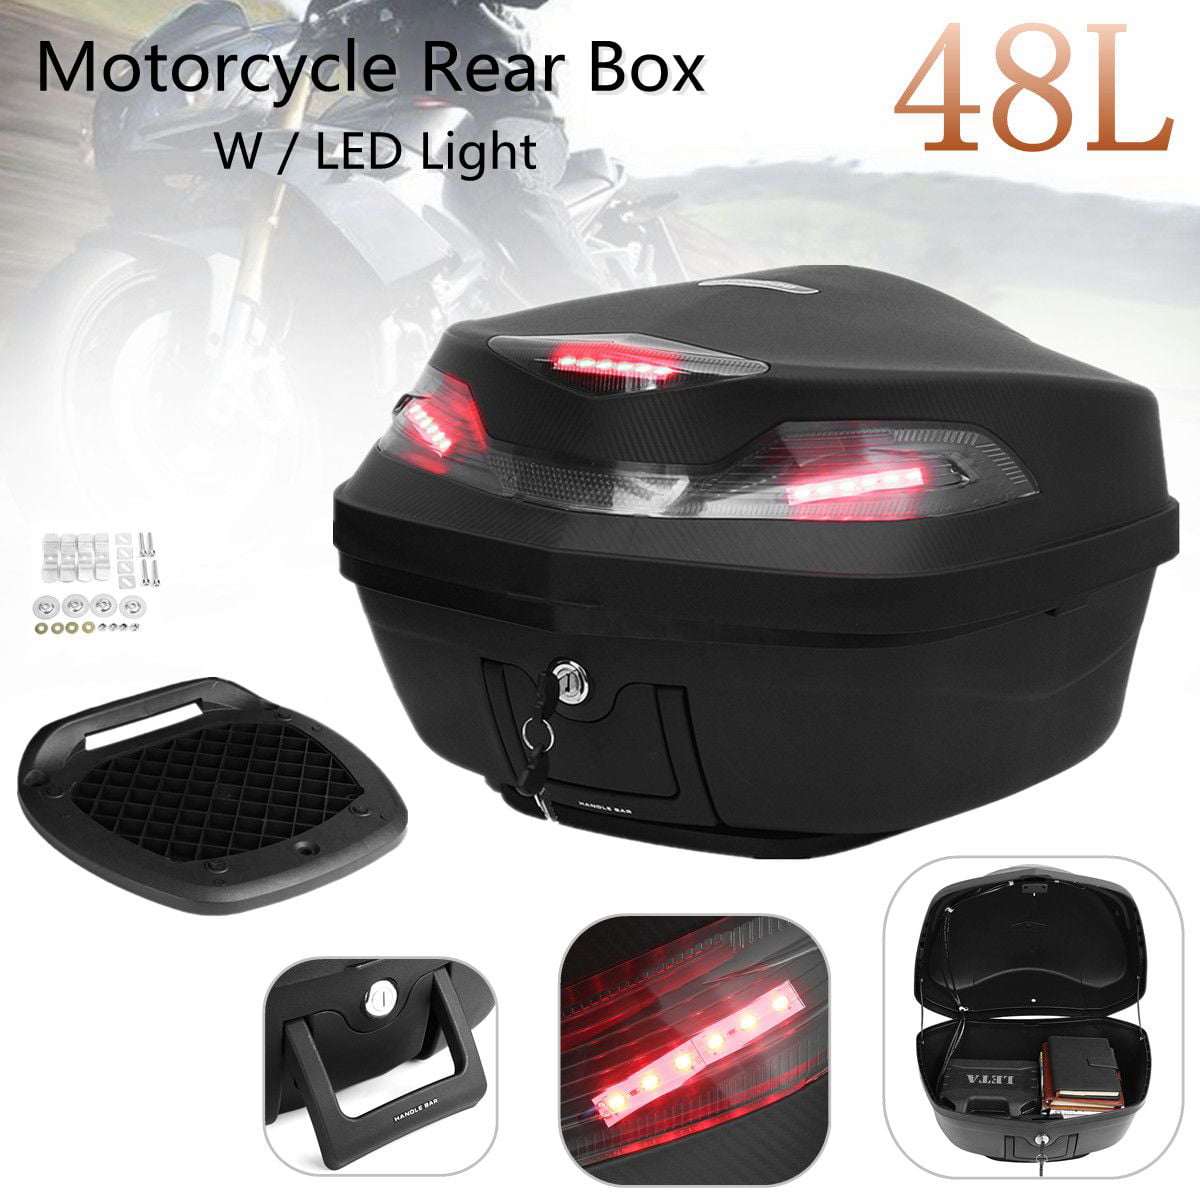 ZHANGAO 48L Motorcycle Scooter Top Box Topbox Rear Luggage Storage W/LED Light Universal Decorative lights